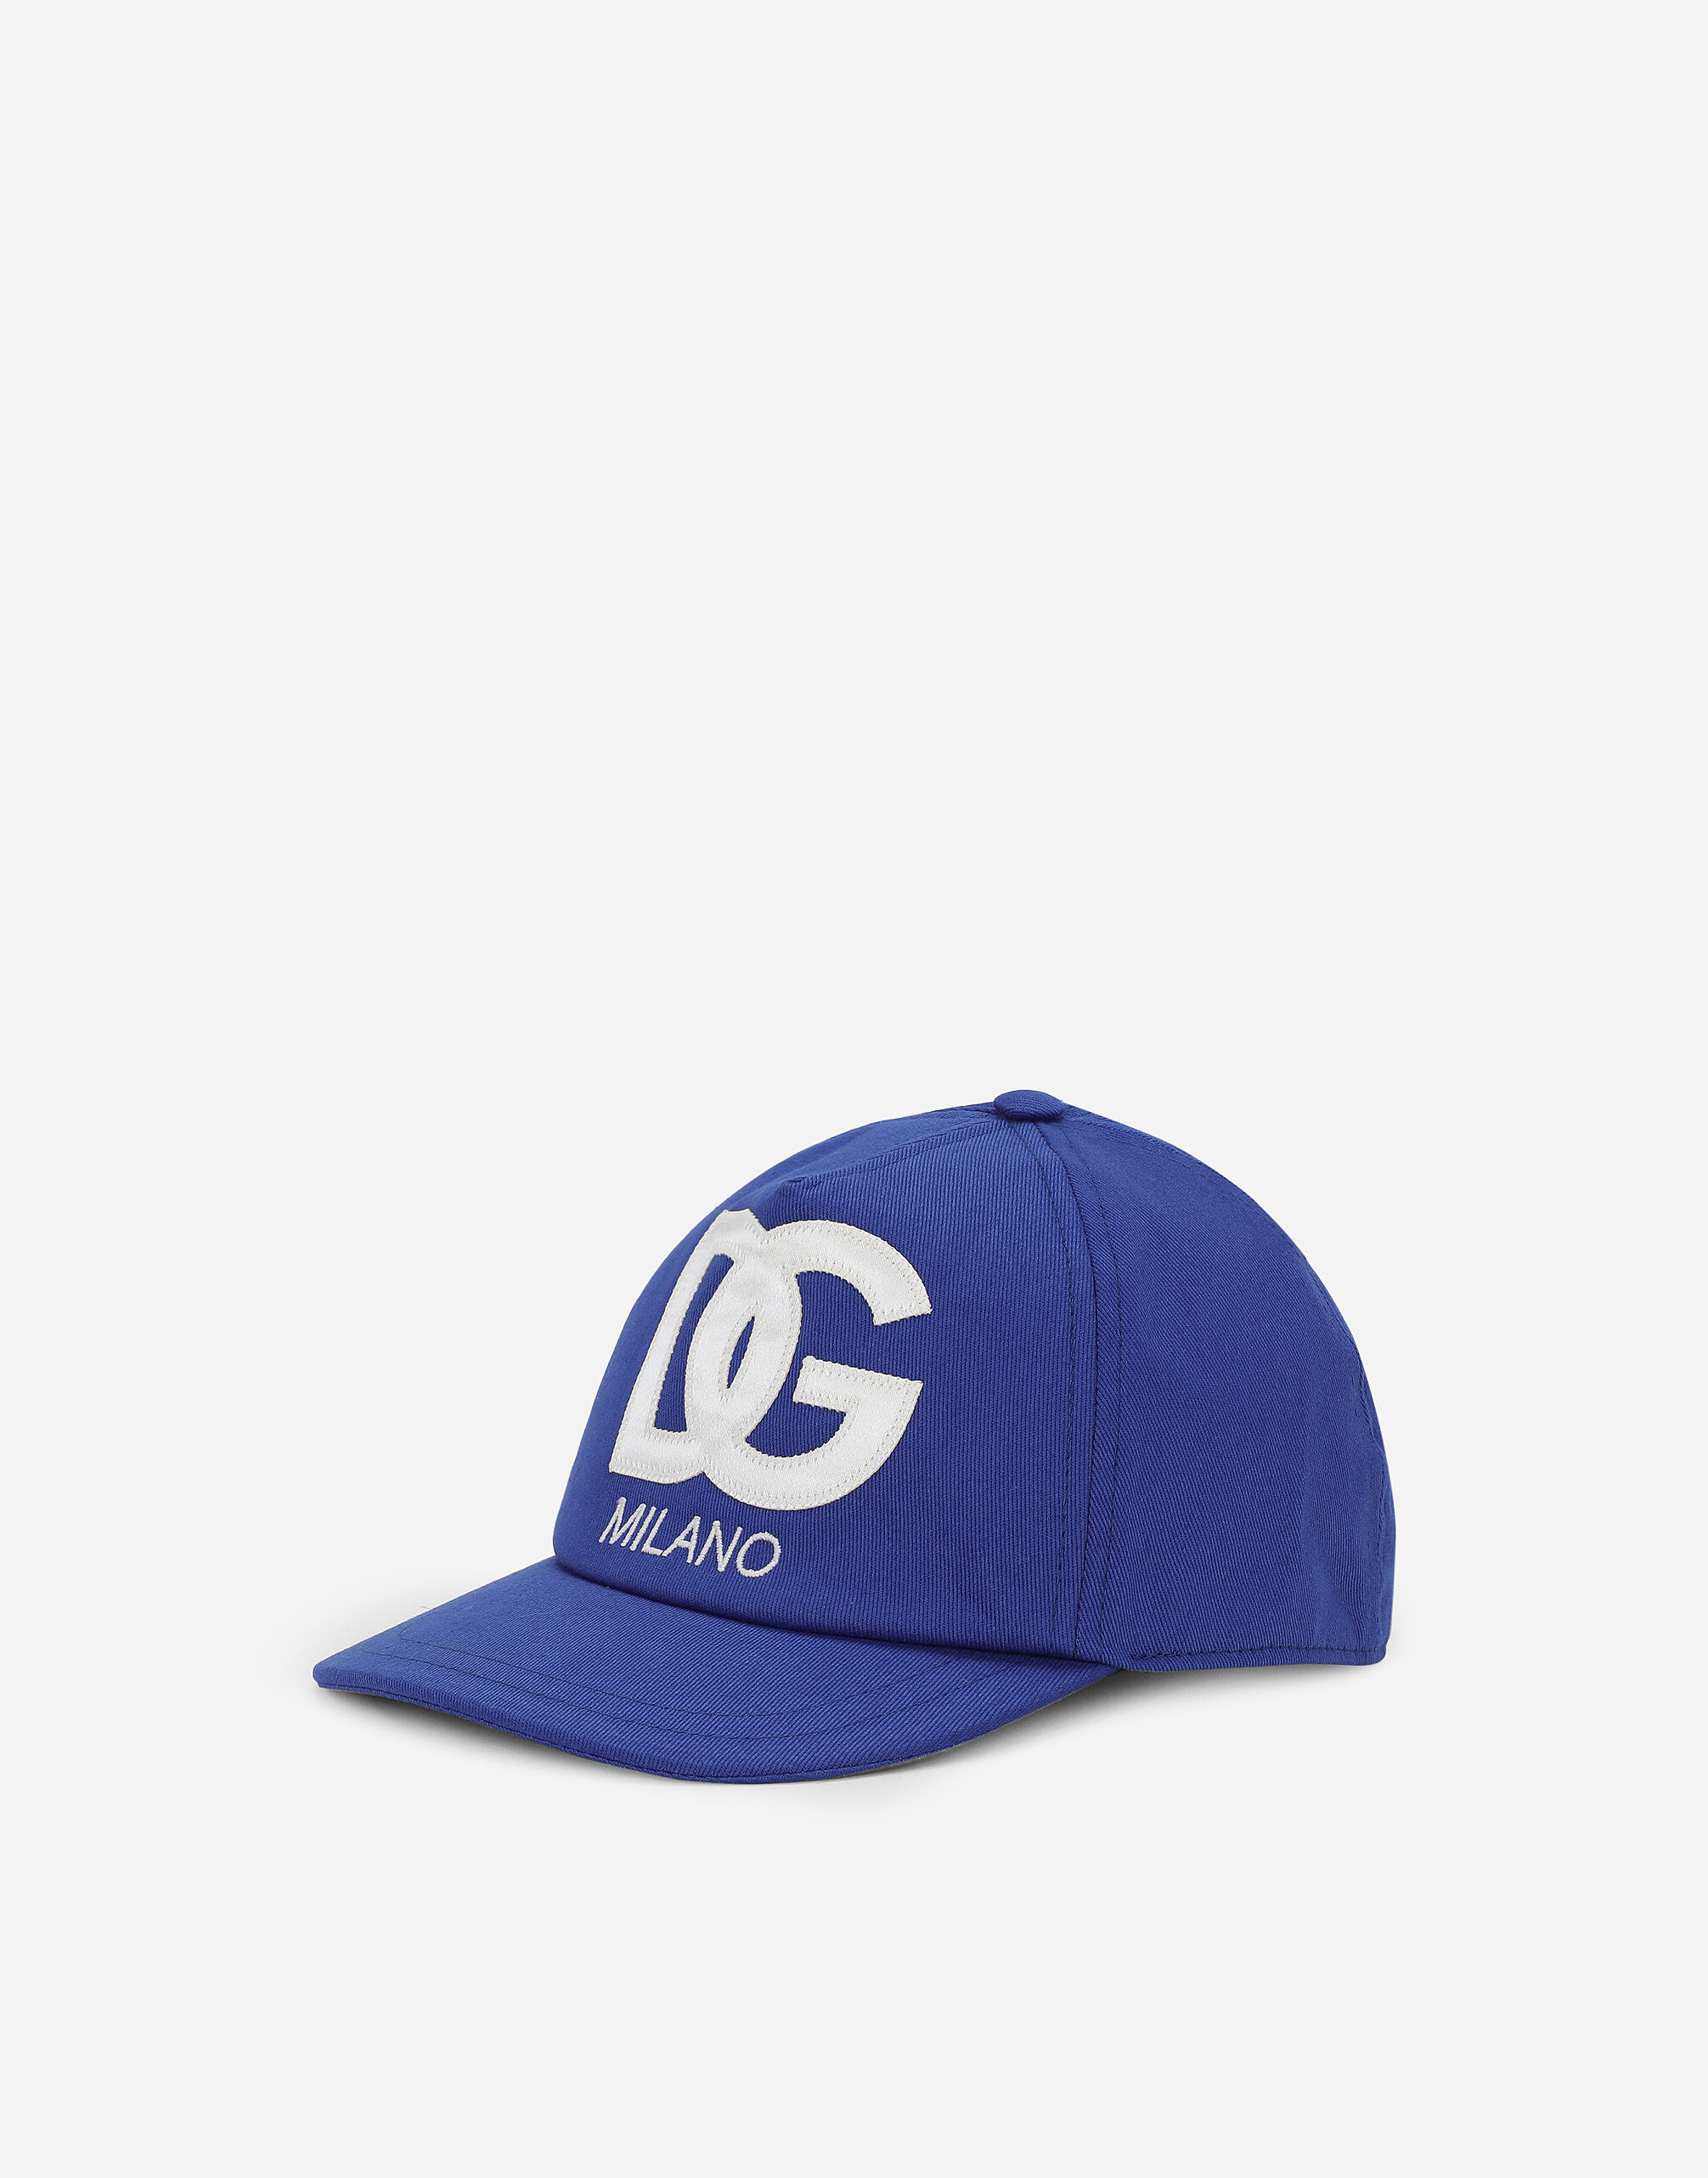 Dolce & Gabbana Baseball cap with DG logo Print LB7A22HI1T5